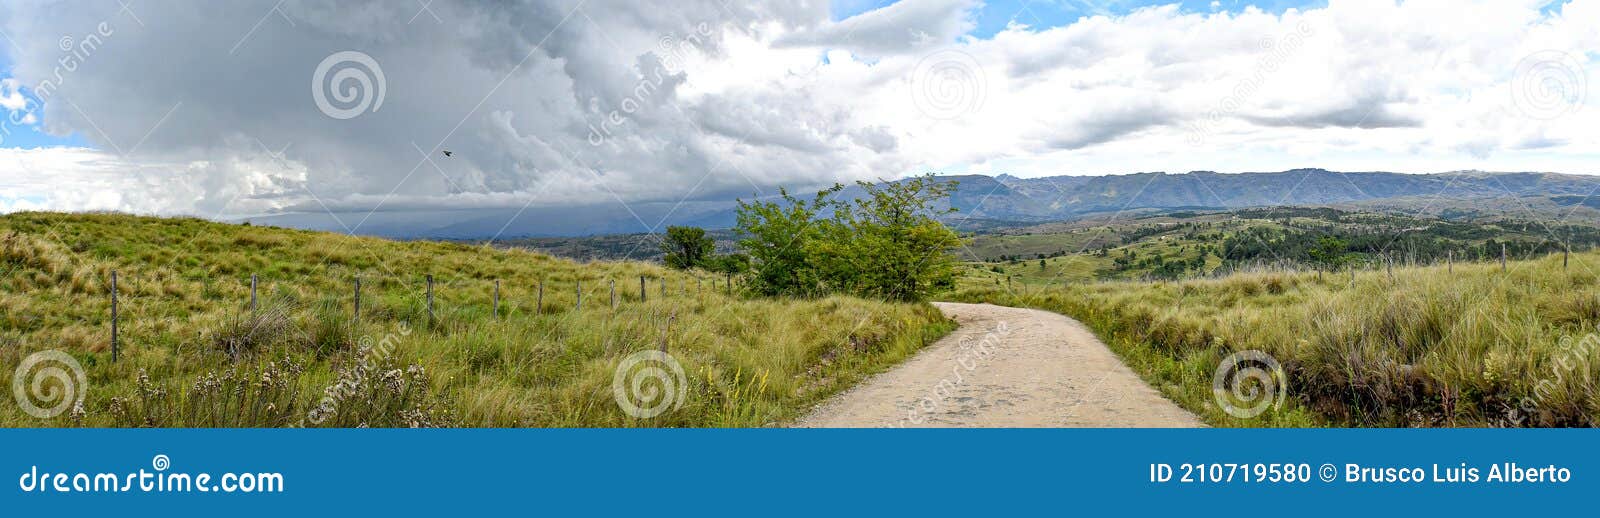 the magnificent landscape around the village of villa alpina alpes village in calamuchita, cordoba, argentina